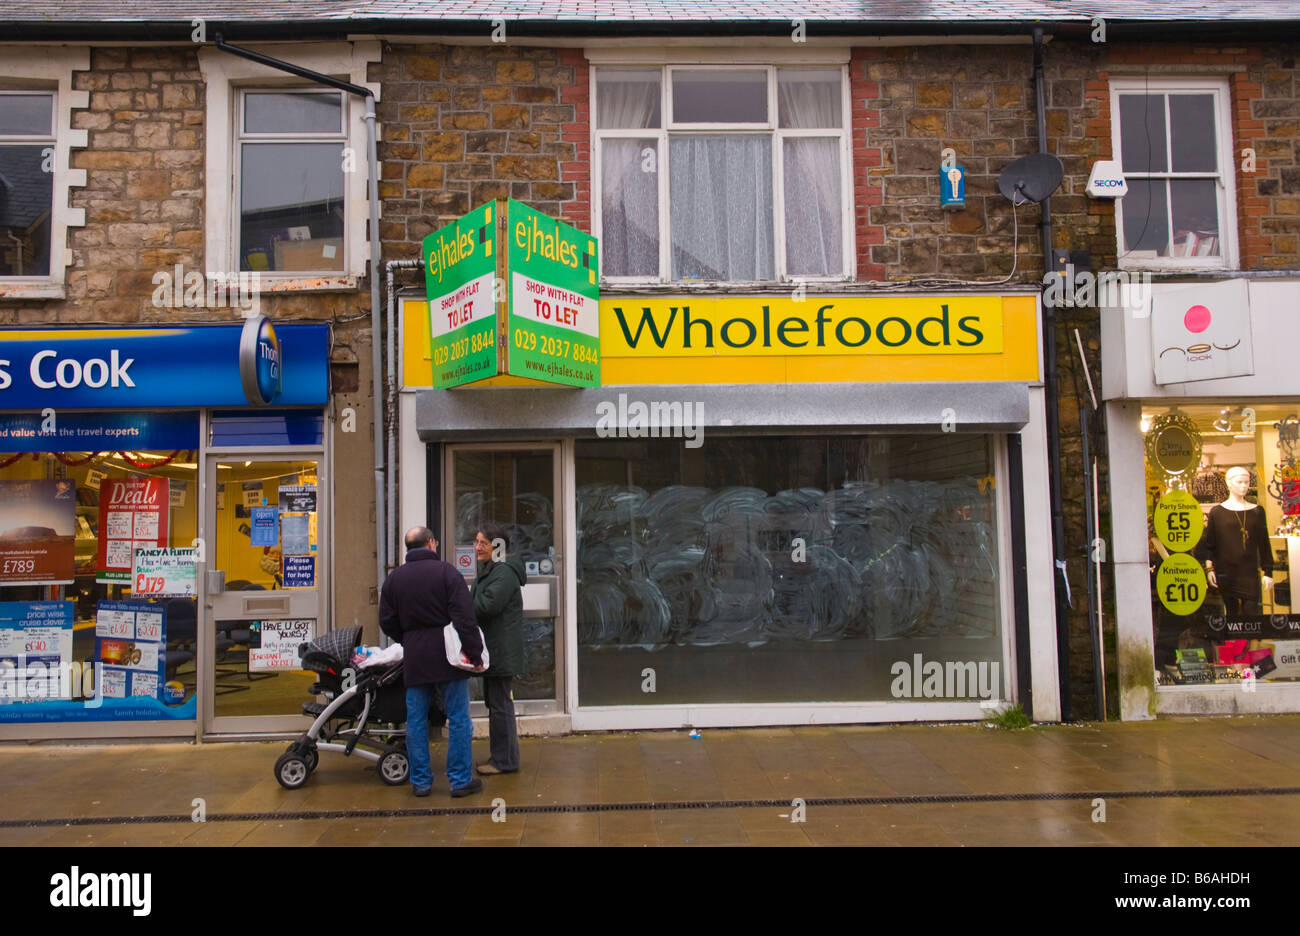 Chiuso il negozio Wholefoods a lasciarlo high street in Ebbw Vale Blaenau Gwent South Wales UK Foto Stock